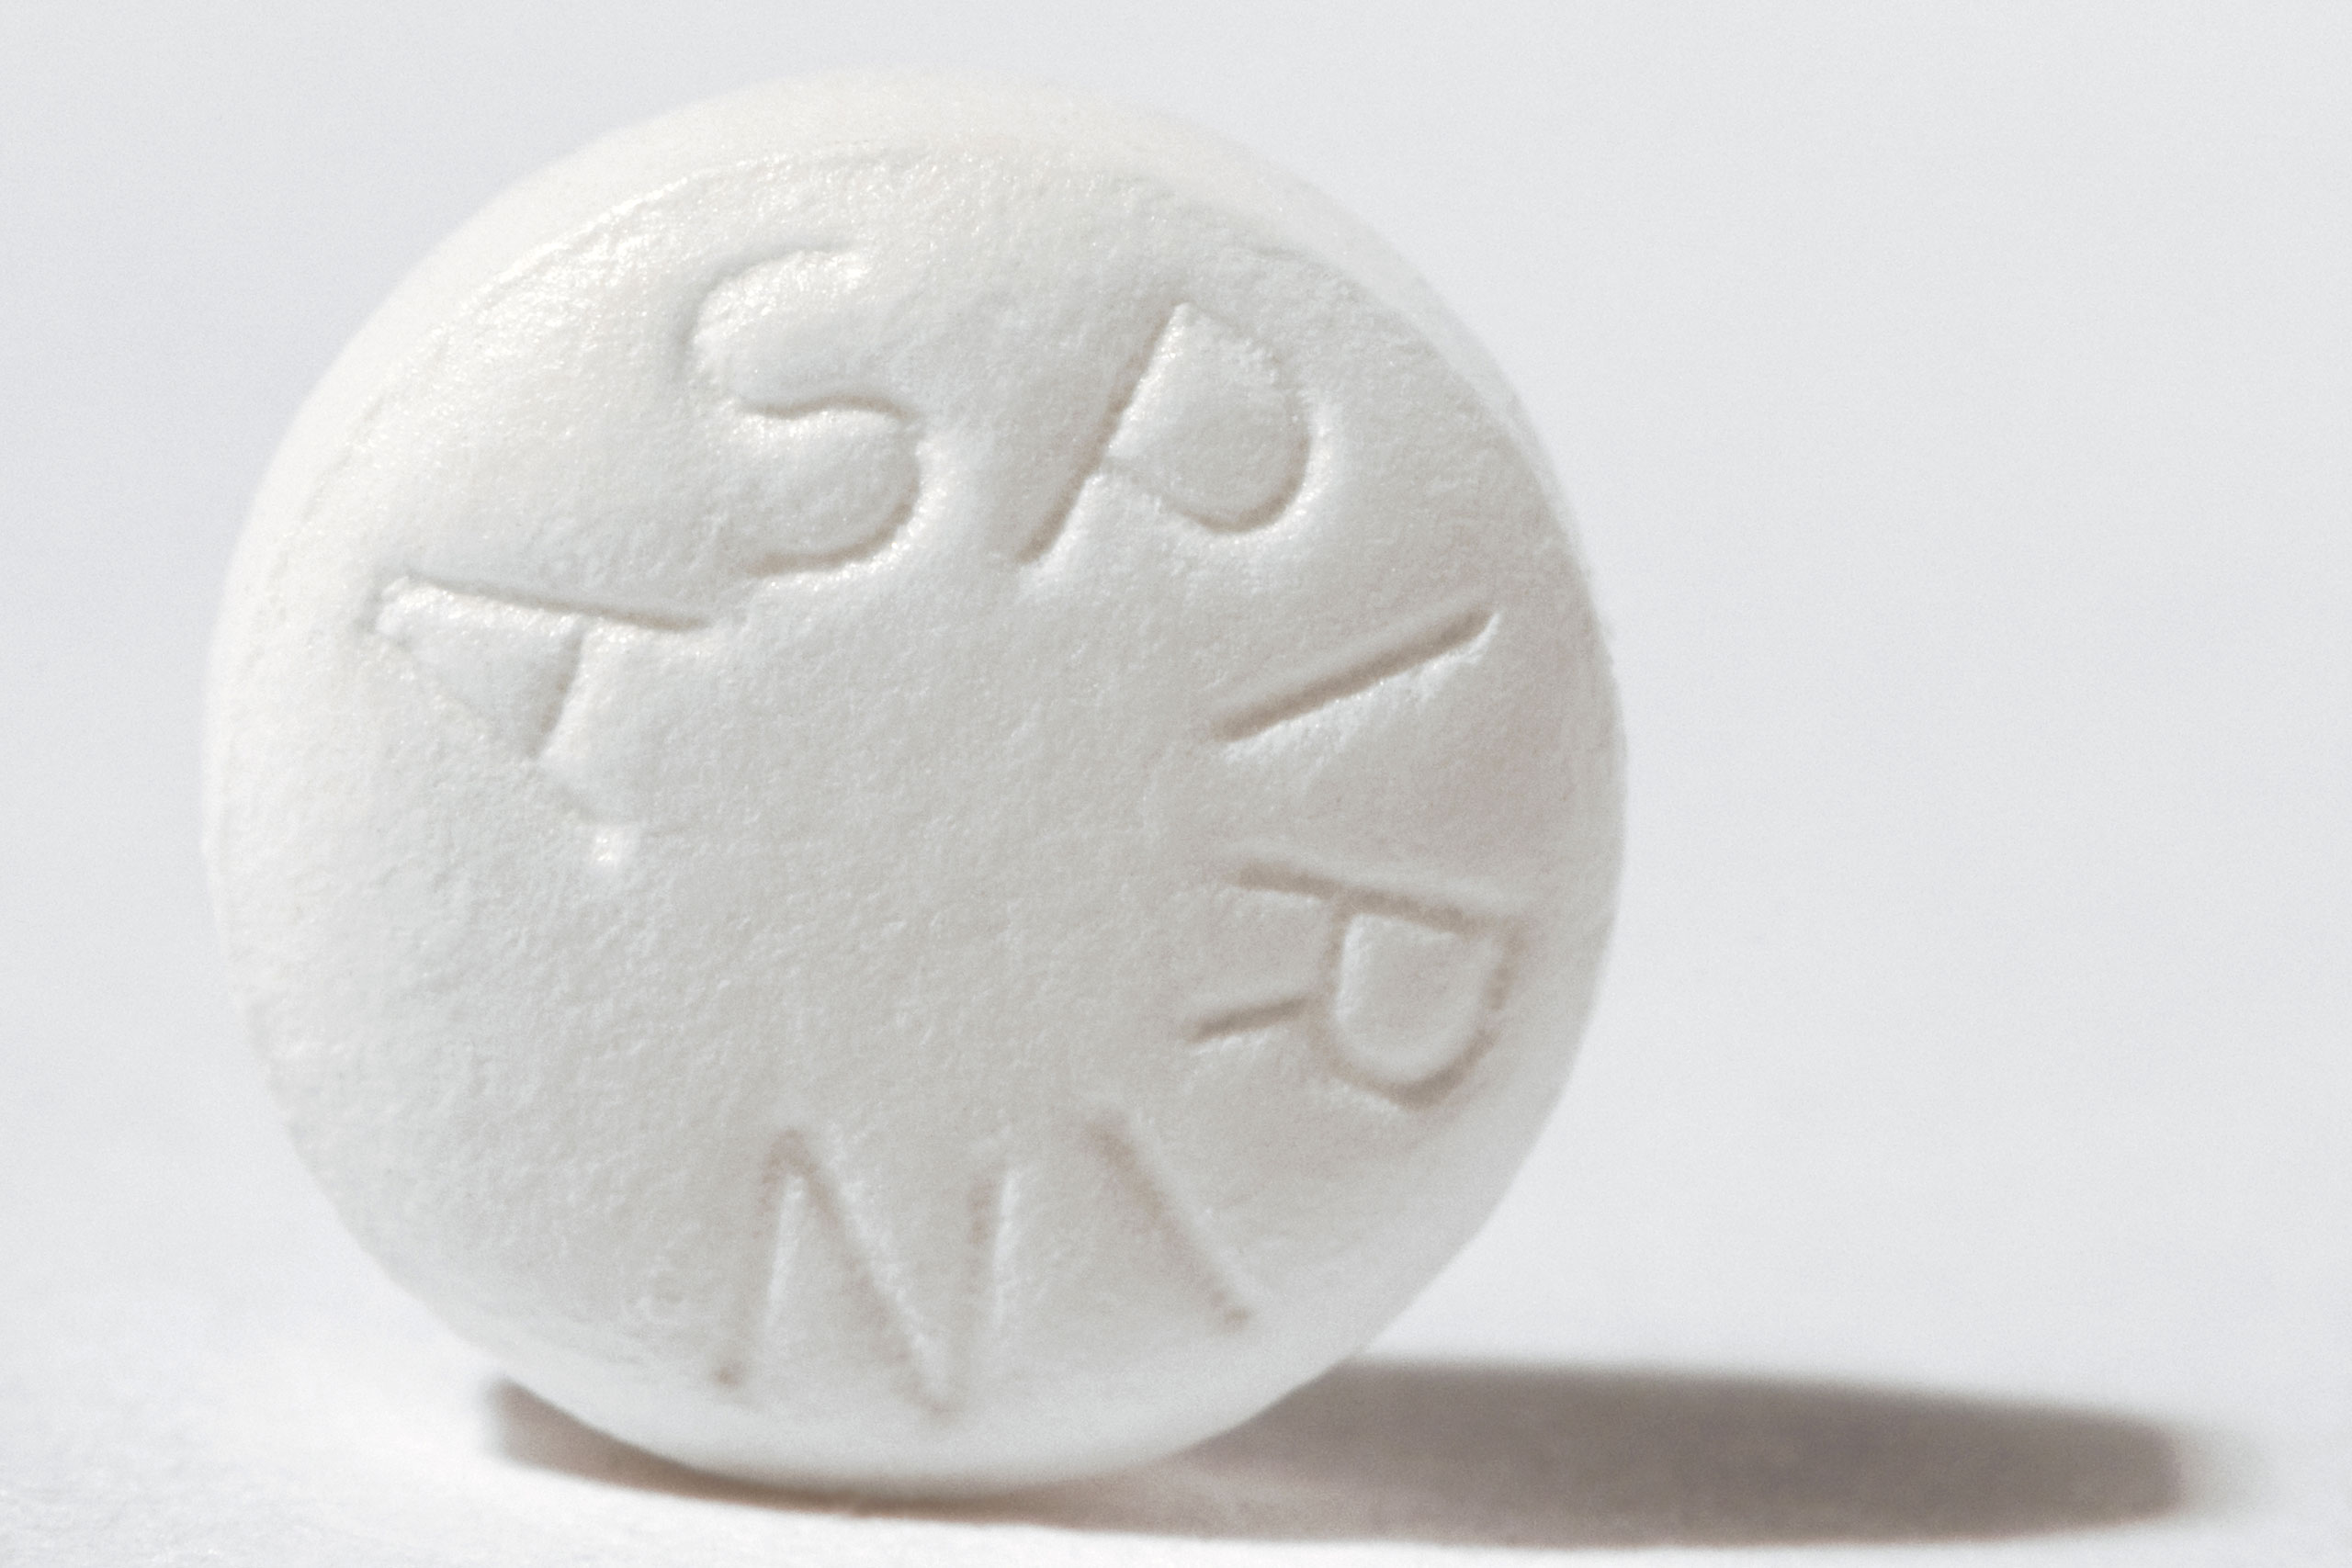 how did aspirin get its name